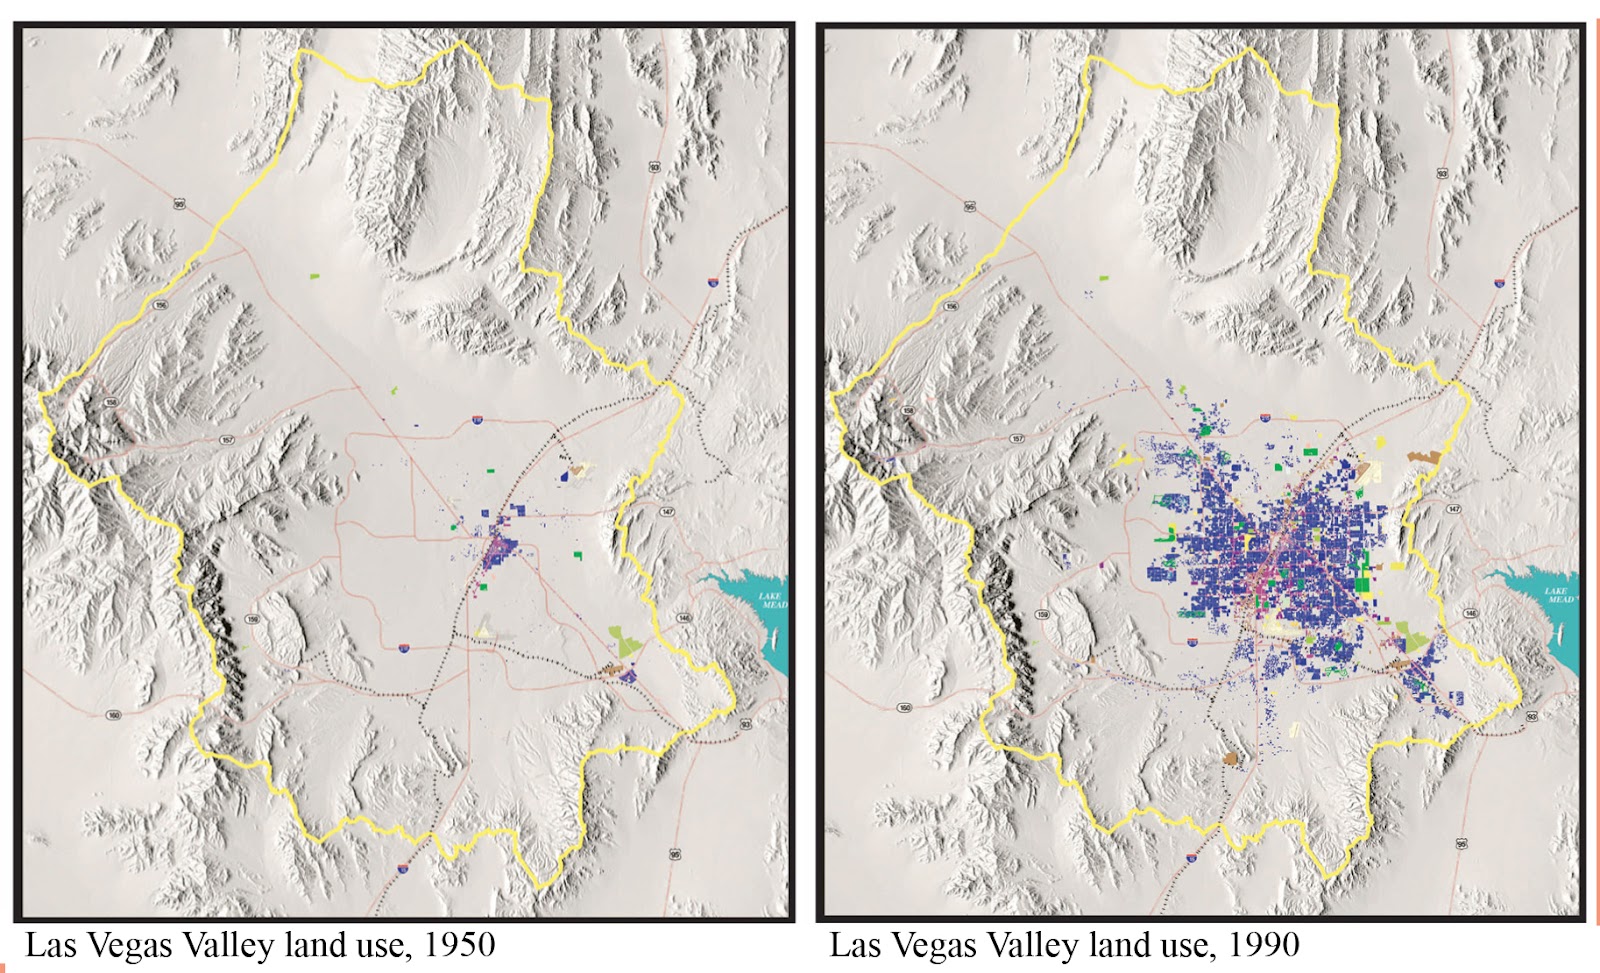 LAS AGUAS: Las Vegas, A History of "Gambling with Water in the Desert